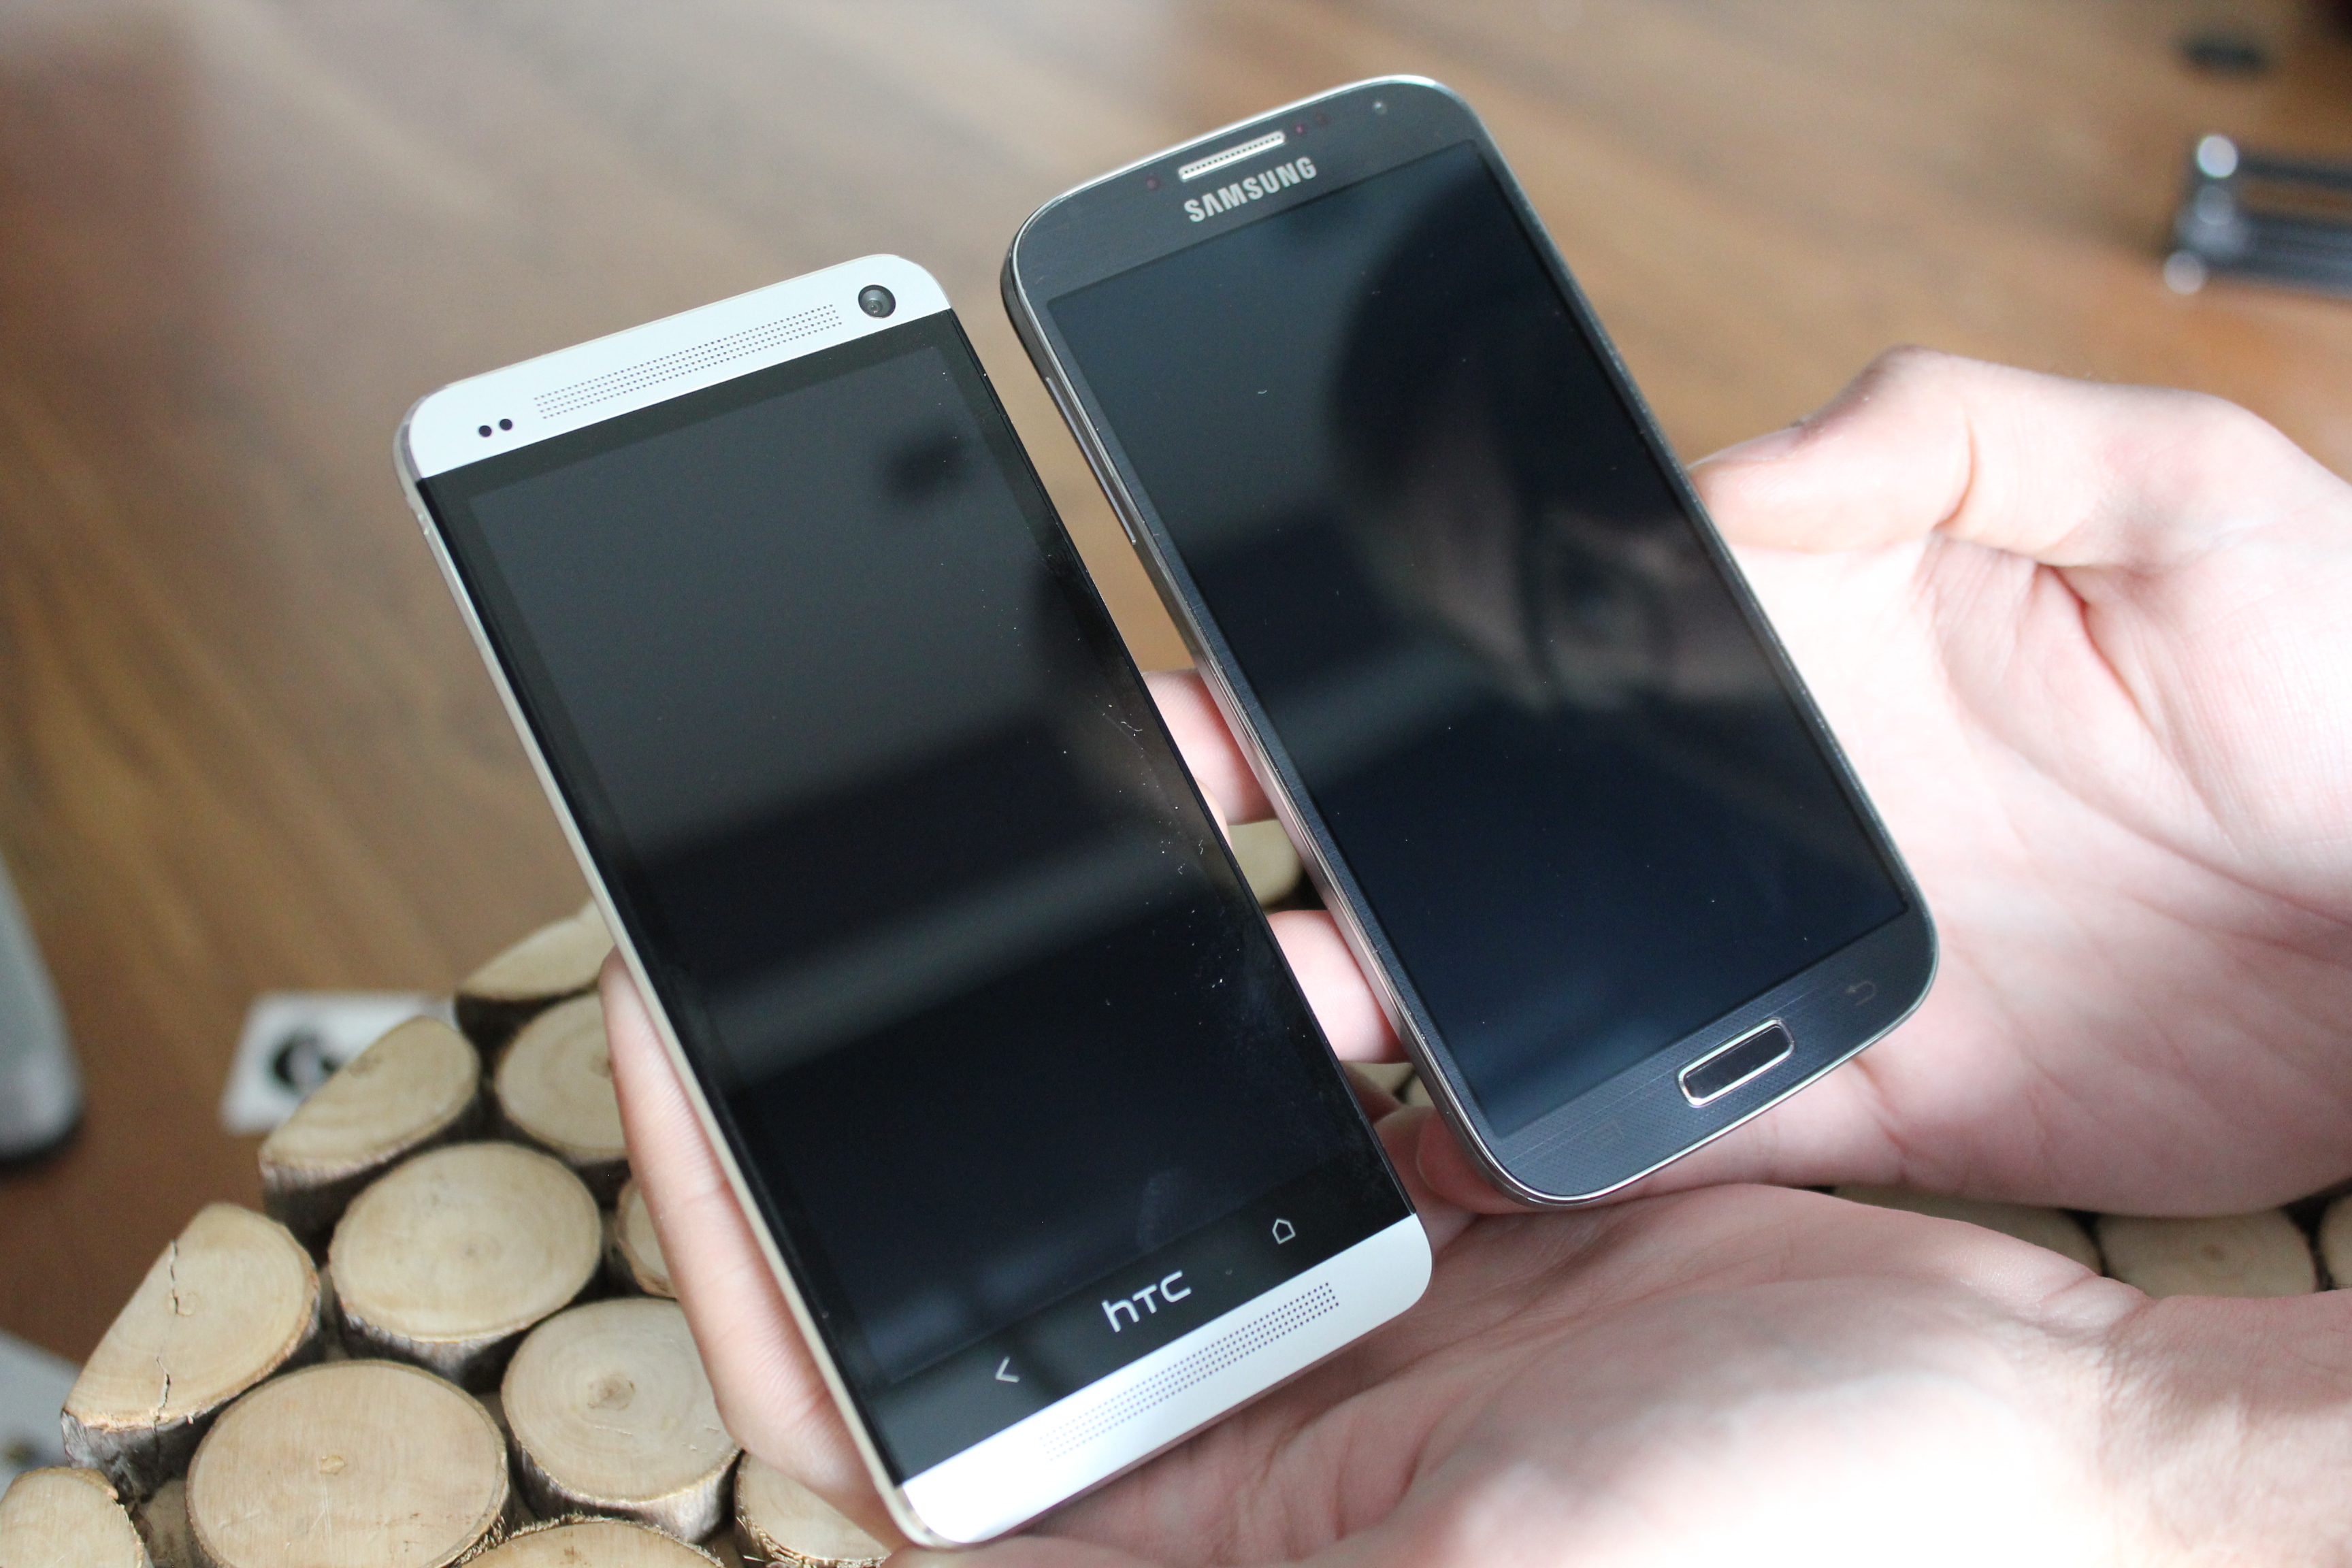  HTC 1 M7 Unlocked GSM 4G LTE Quad-Core Smartphone w/Beats Audio  - Black : Cell Phones & Accessories